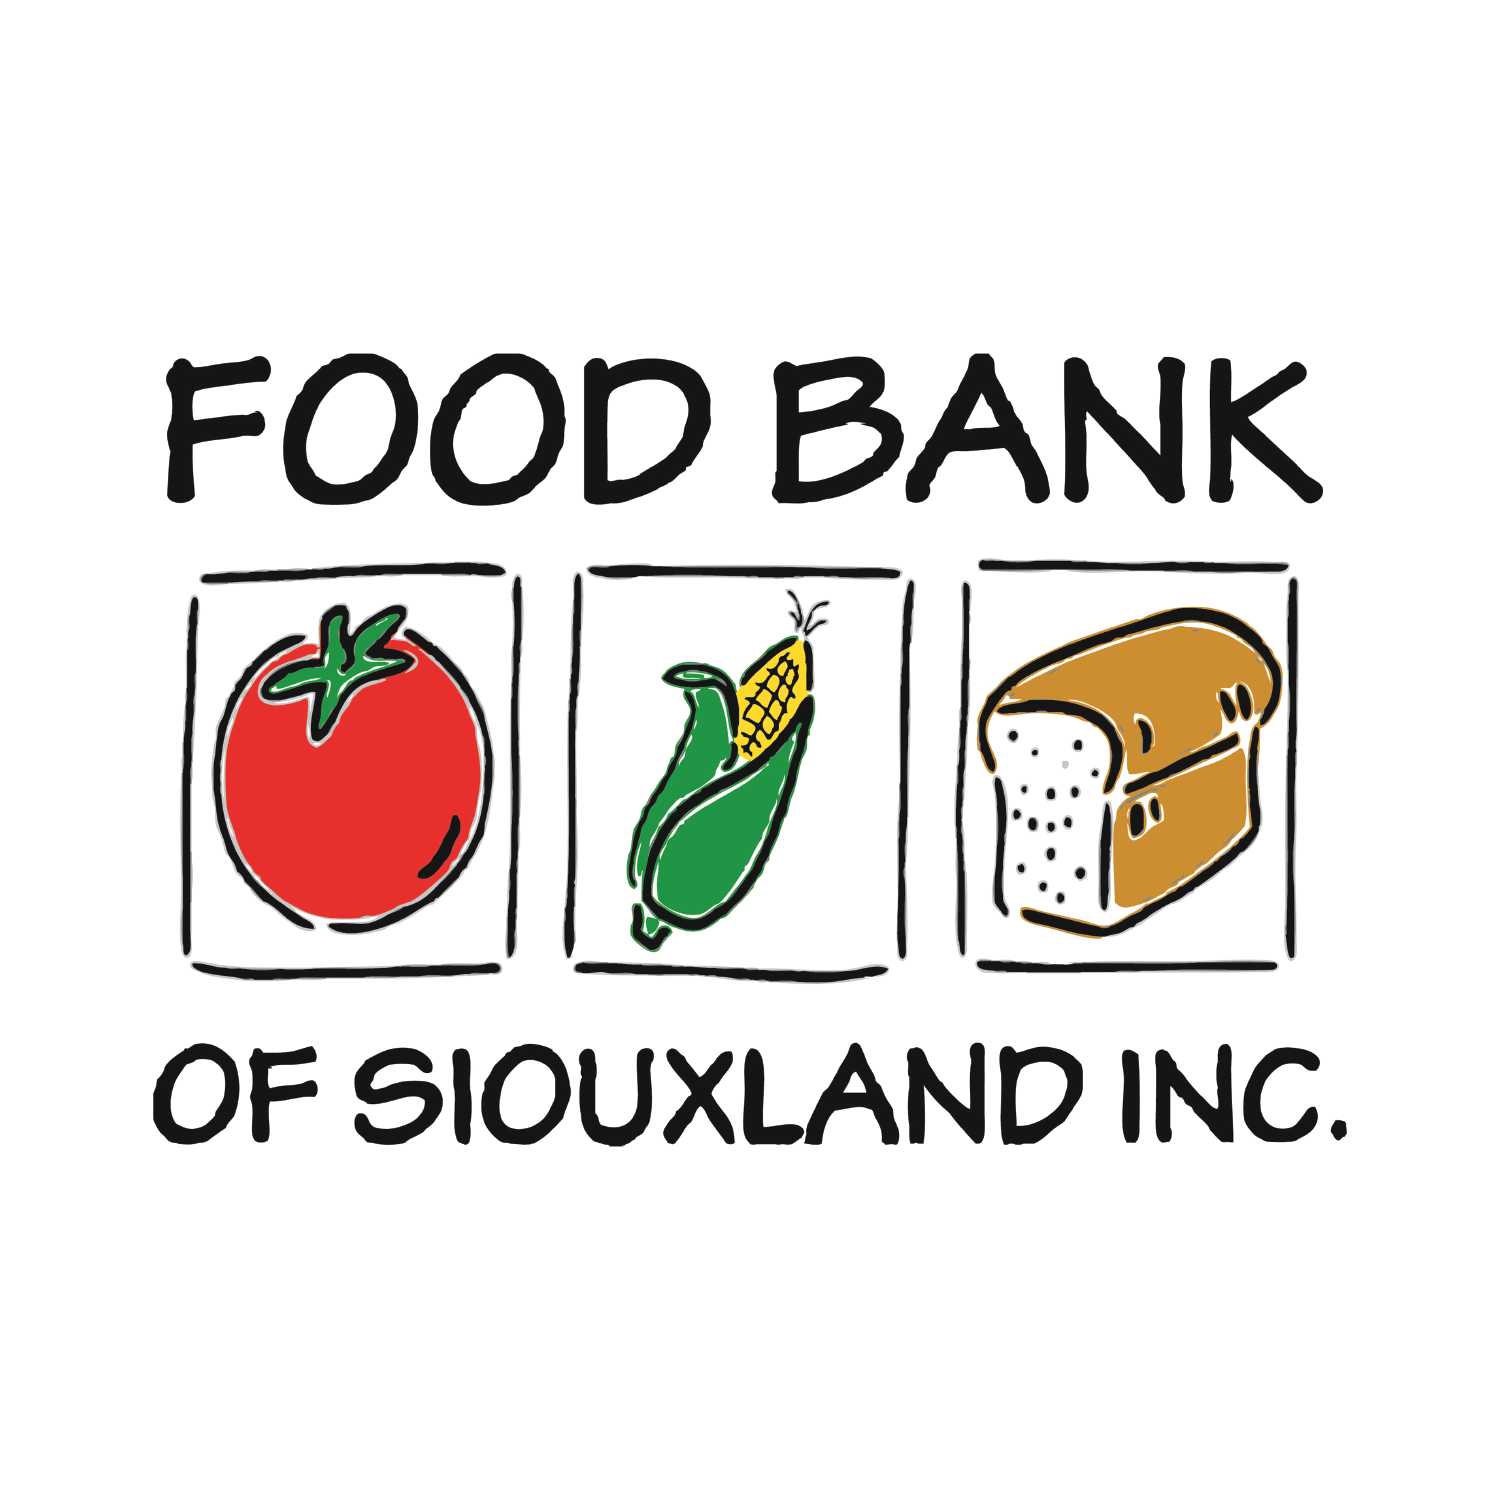 Food Bank Of Siouxland Inc